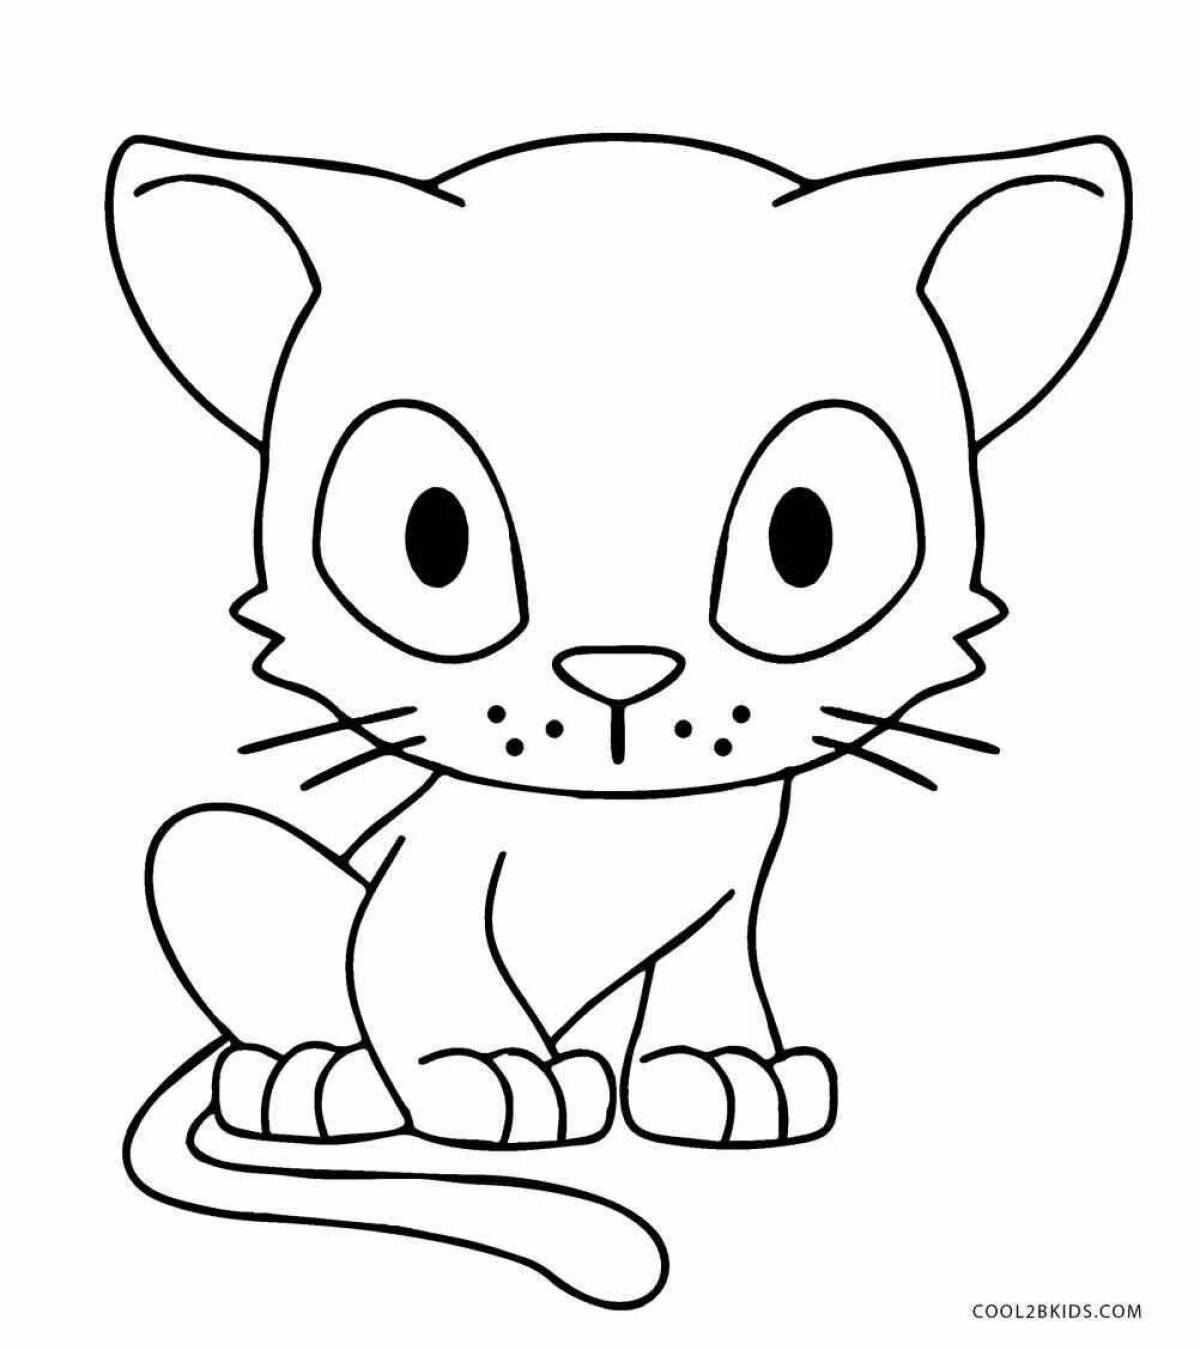 Fun little cat coloring book